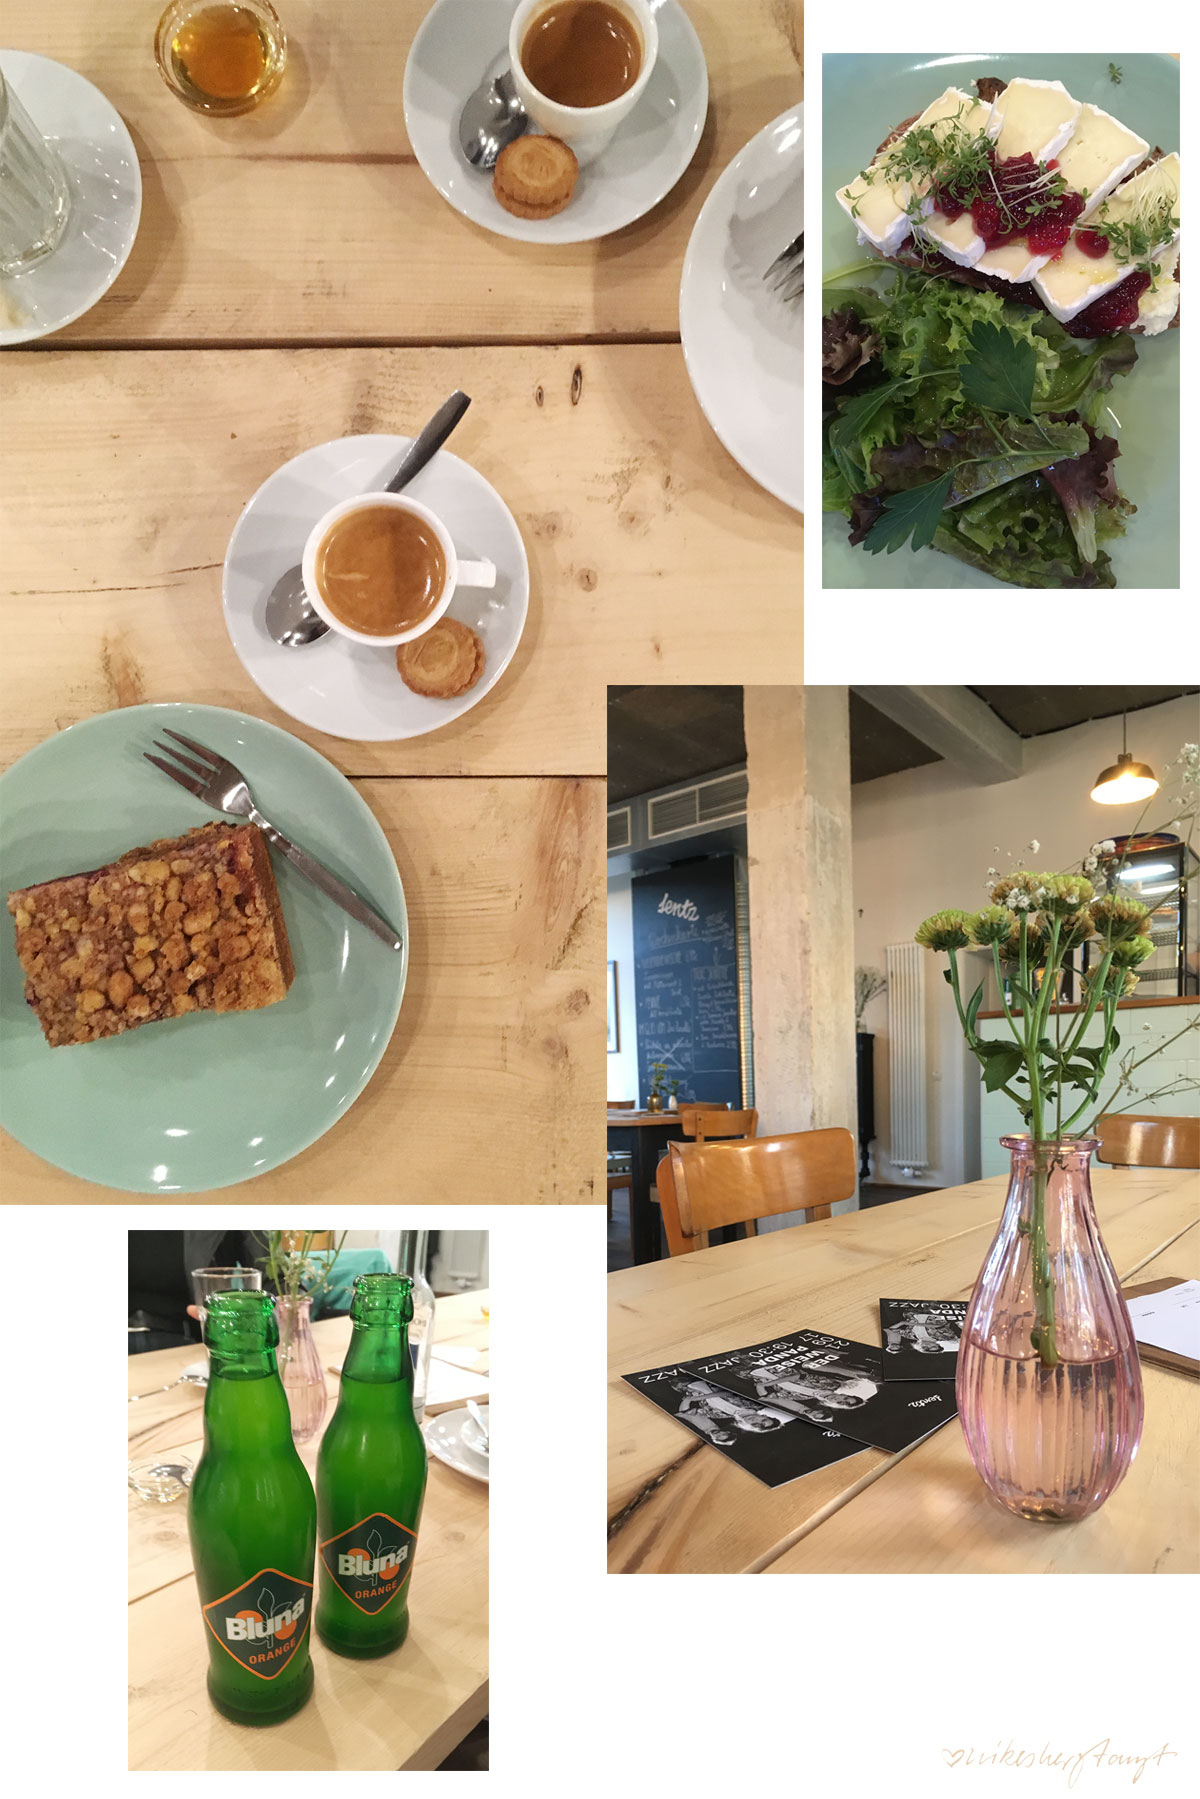 lentz, kultur und kulinarik, café in krefeld, krefeld, nikesherztanzt, #nikeskrefels